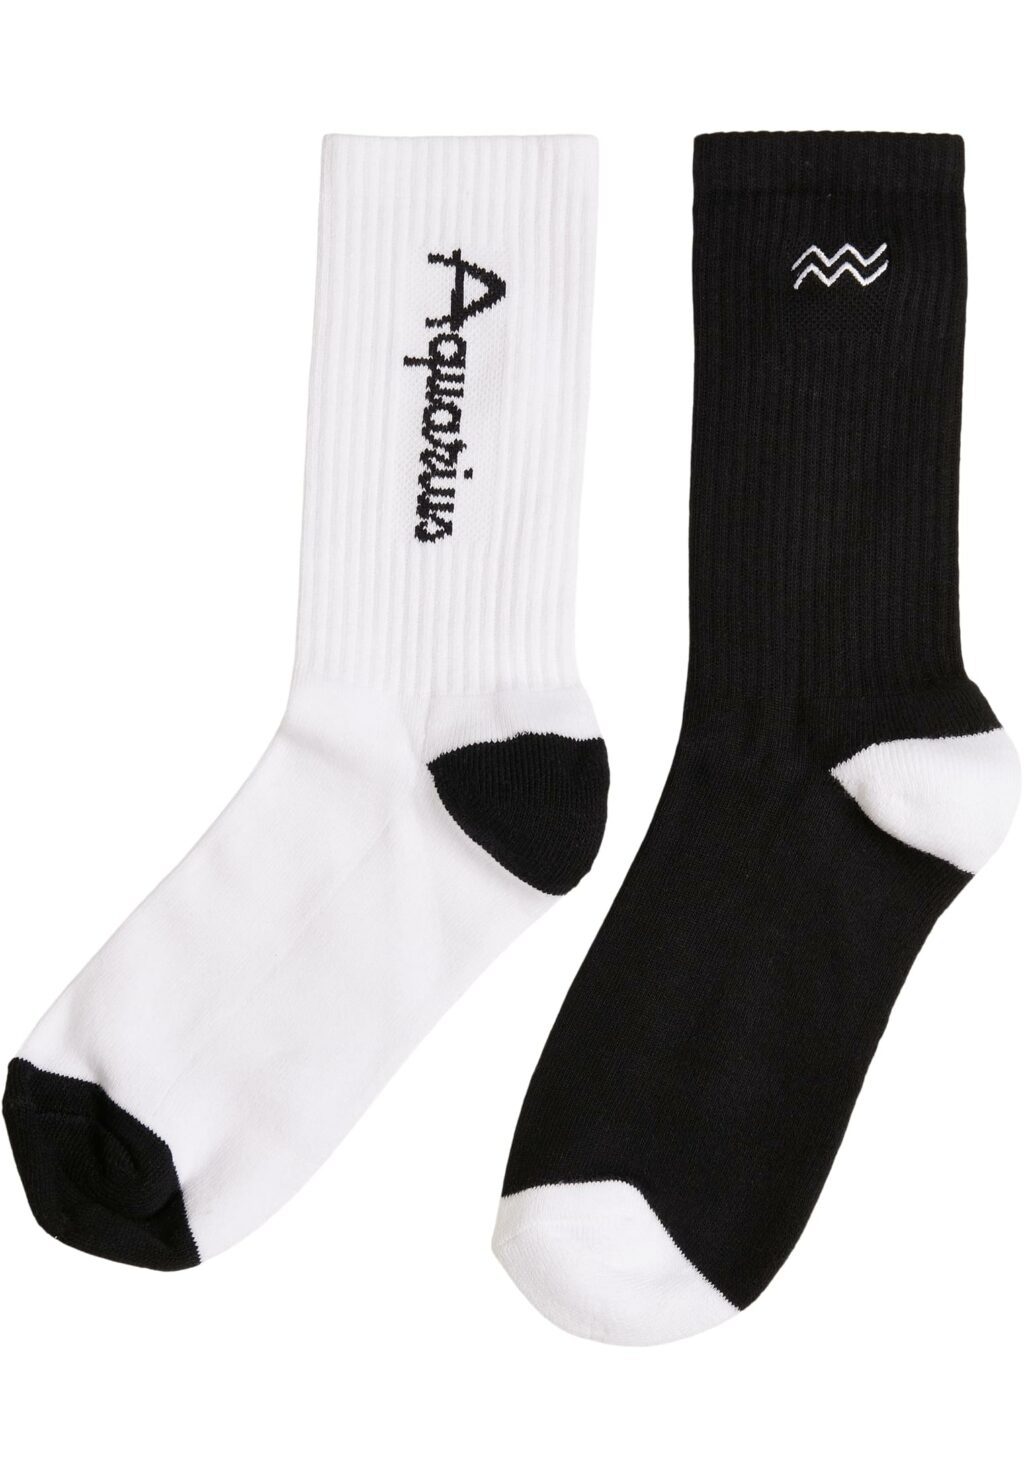 Zodiac Socks 2-Pack black/white aquarius MT2235